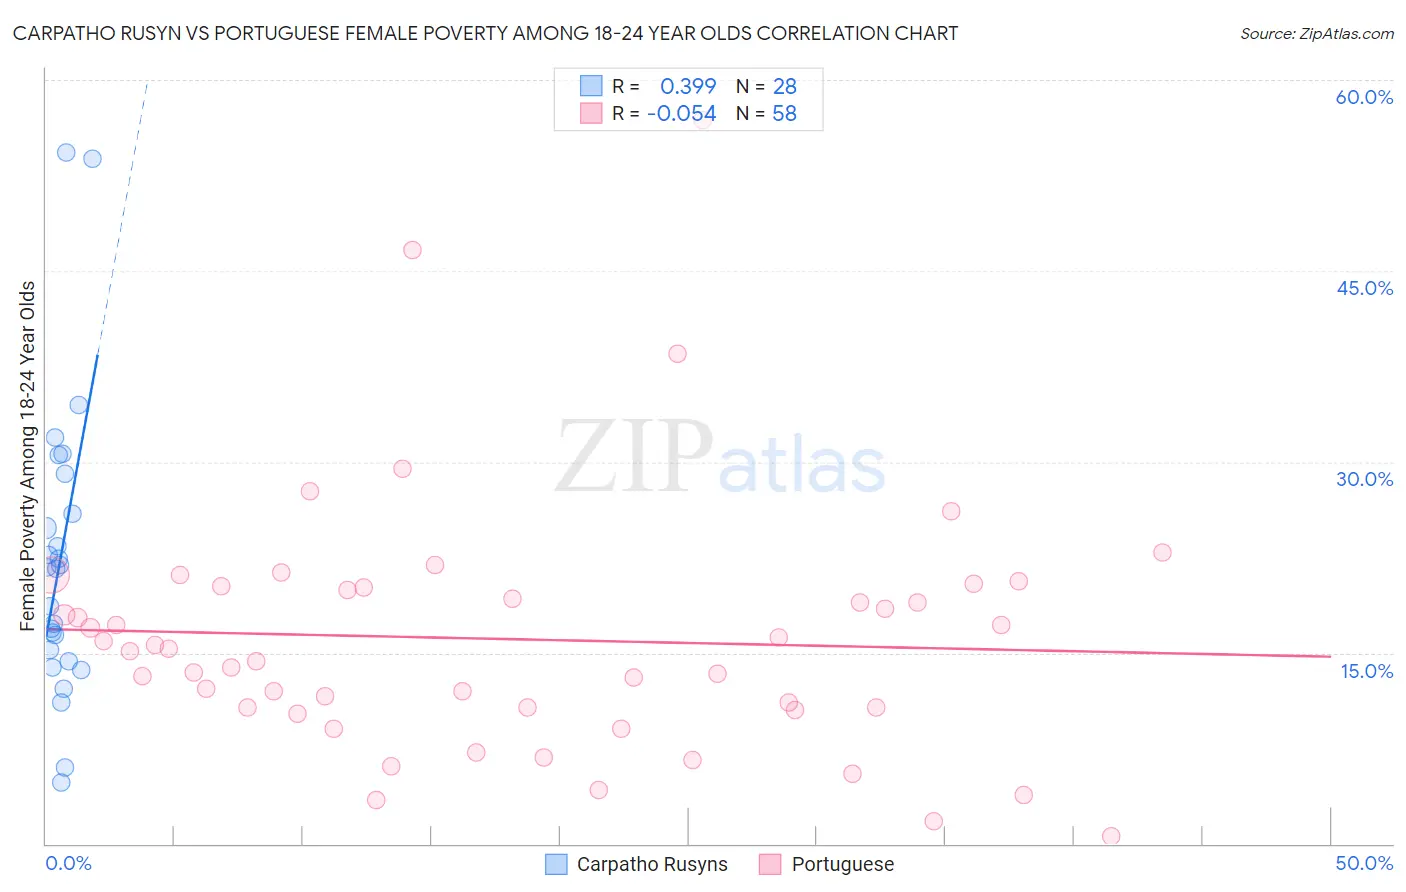 Carpatho Rusyn vs Portuguese Female Poverty Among 18-24 Year Olds